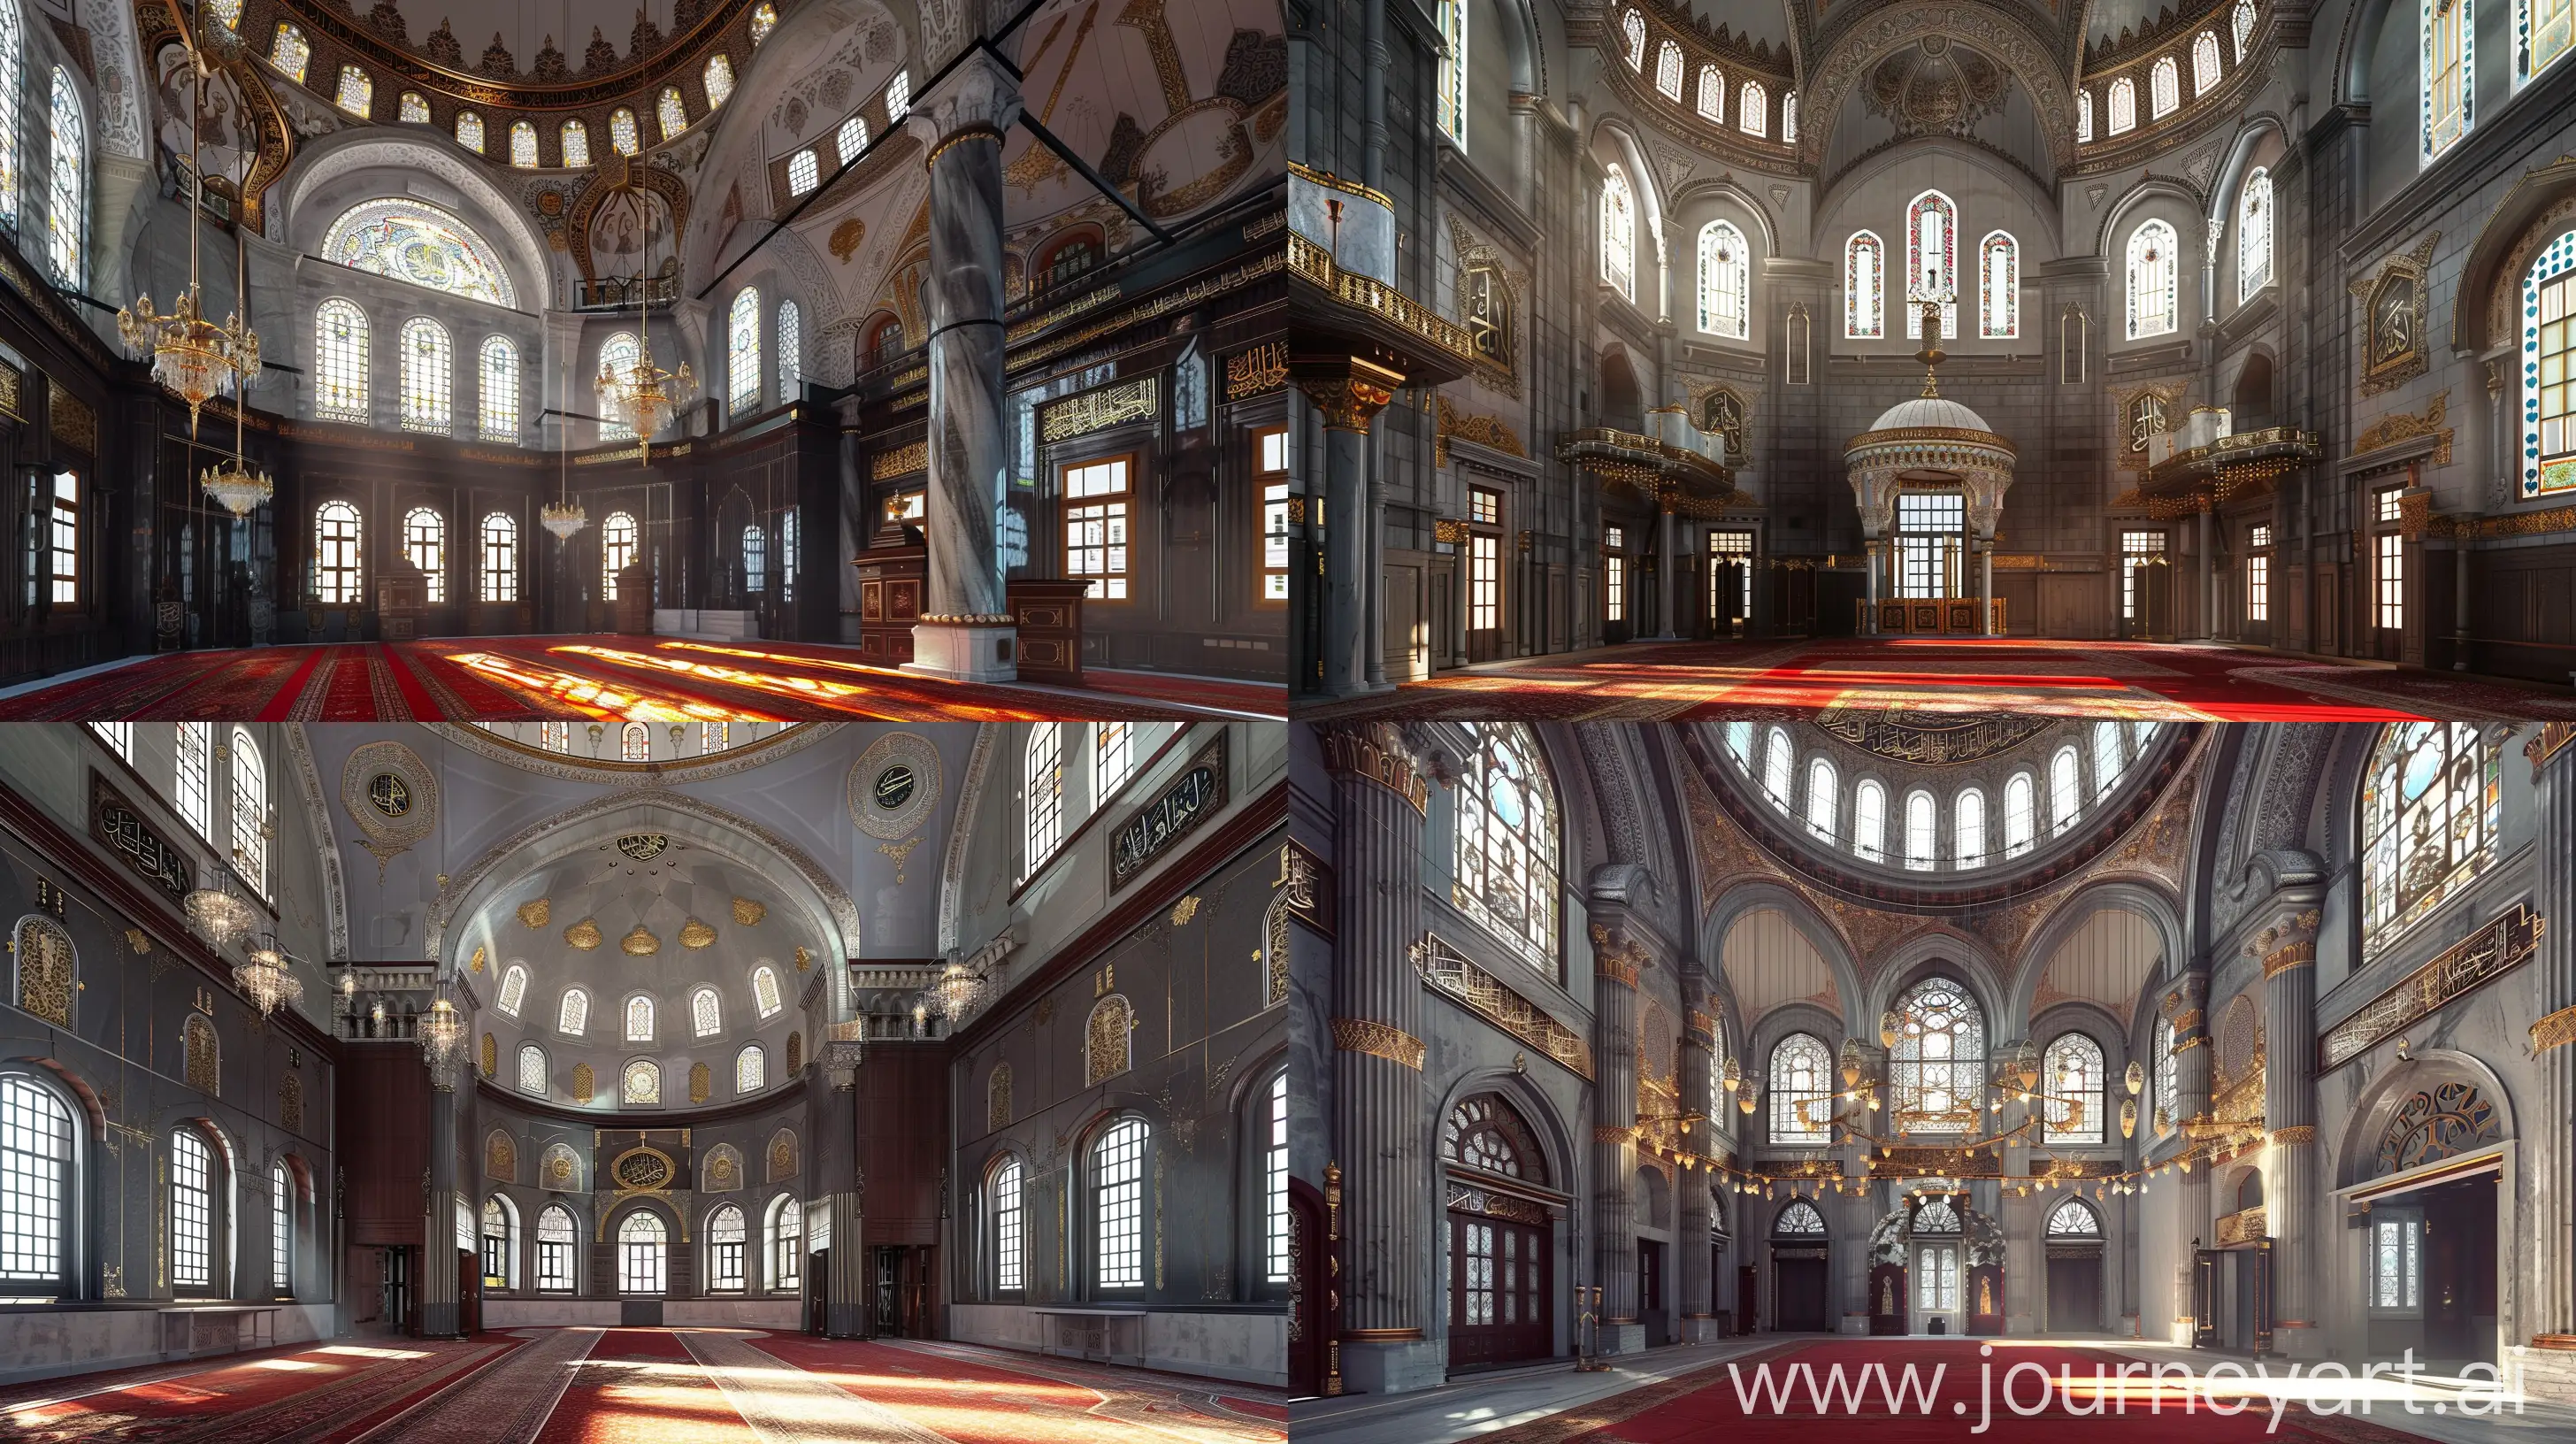 Elegant-Baroque-Style-Sleymaniye-Mosque-Interior-with-Ornate-Decorations